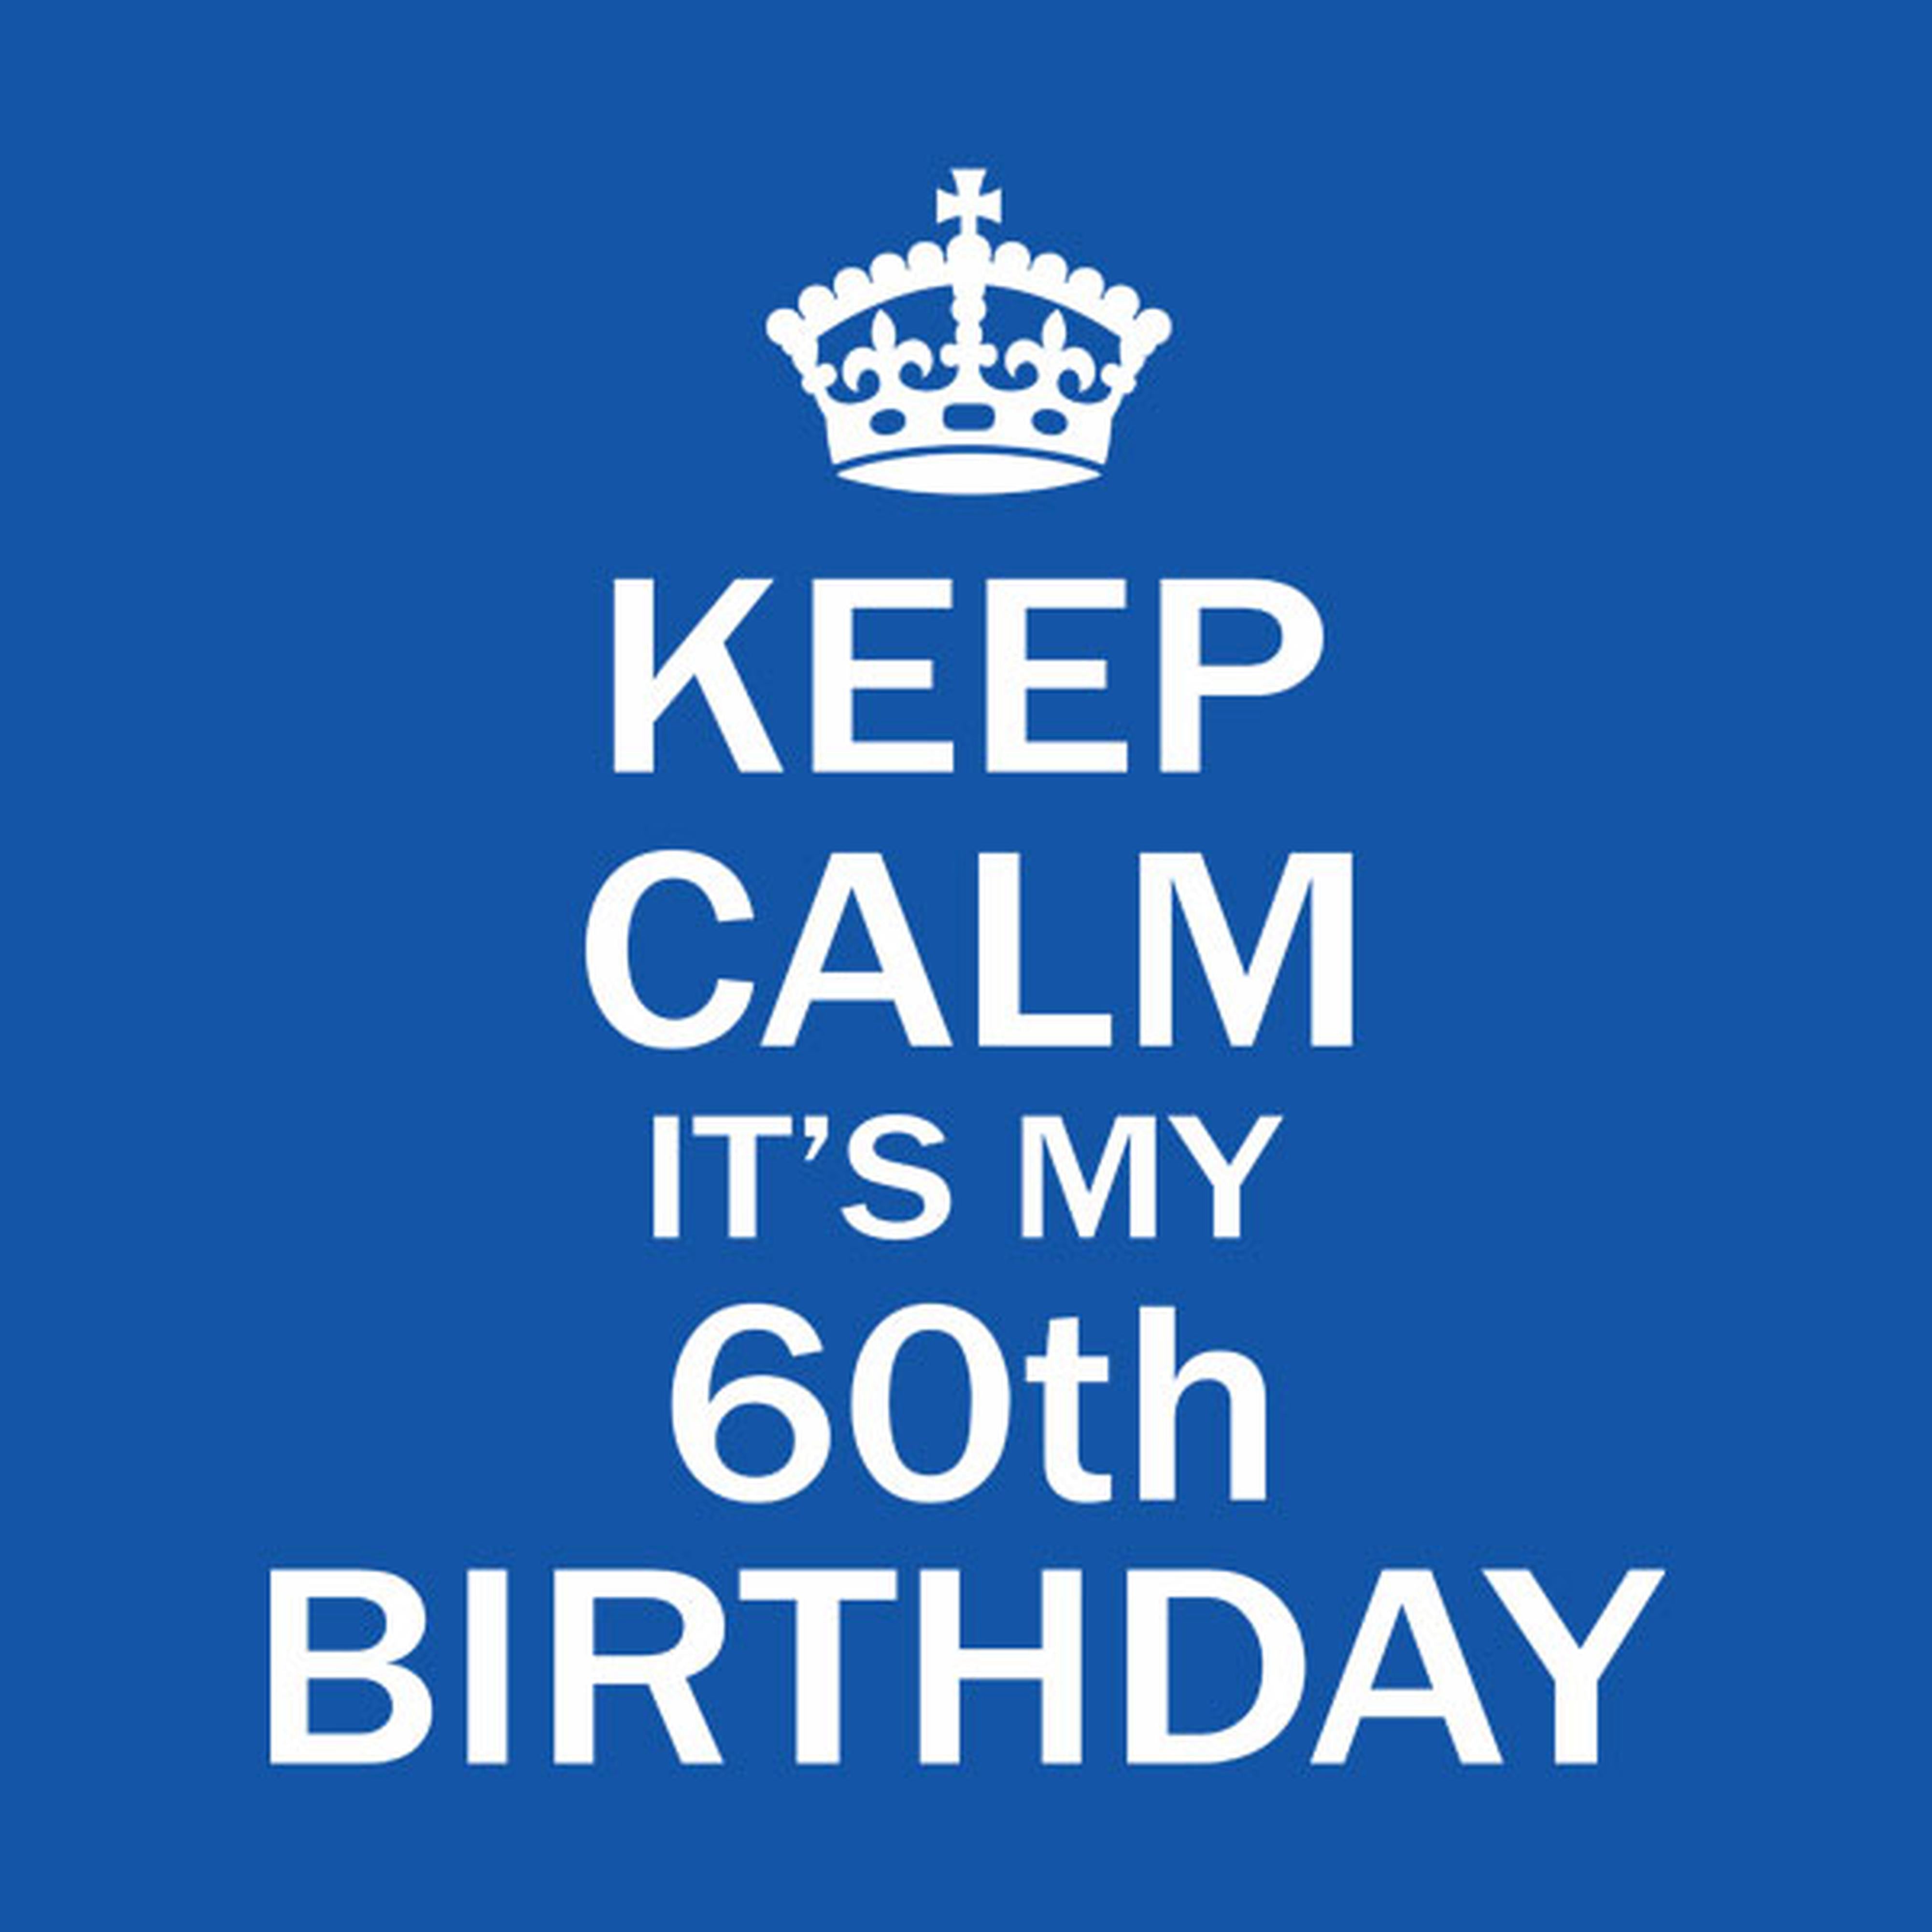 Keep calm it's my 60th birthday